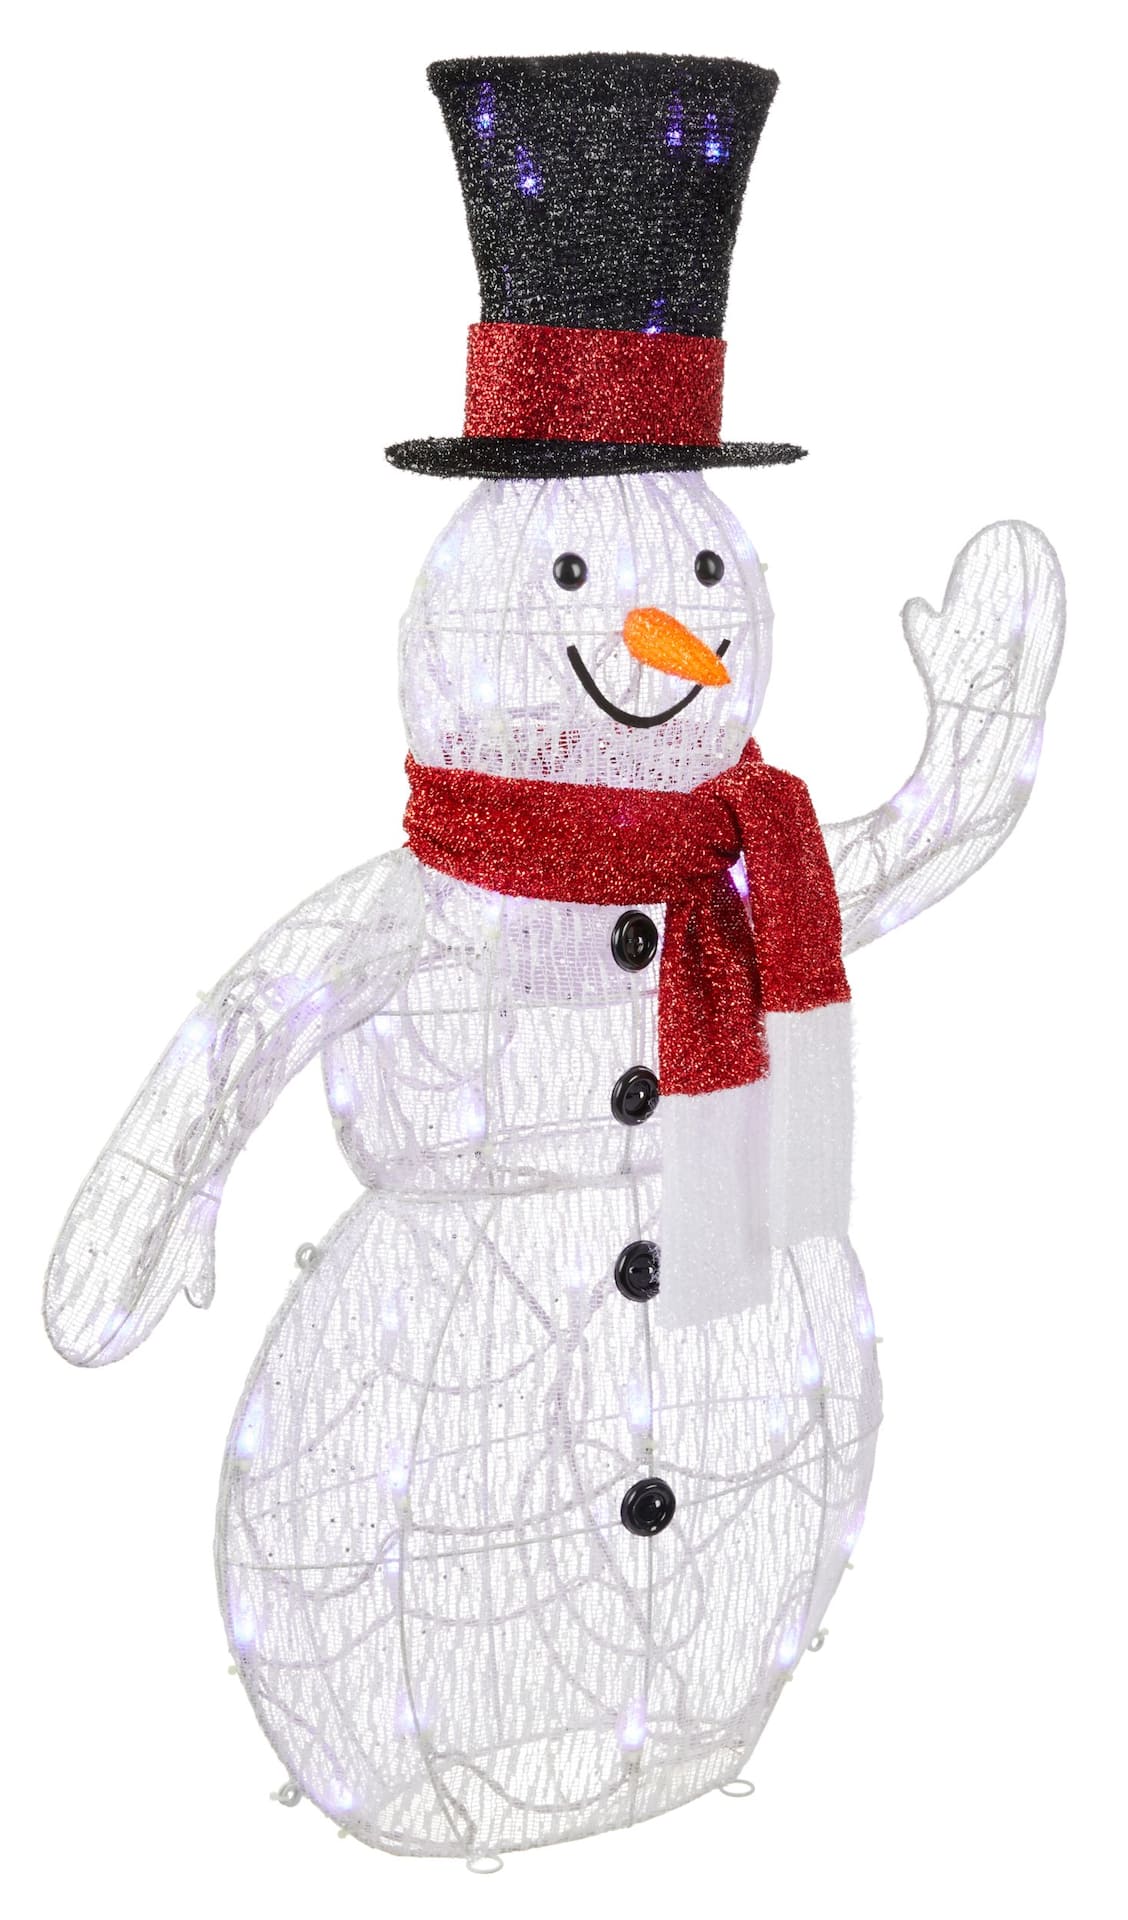 Snowman Custom Leggings Christmas Running Tights